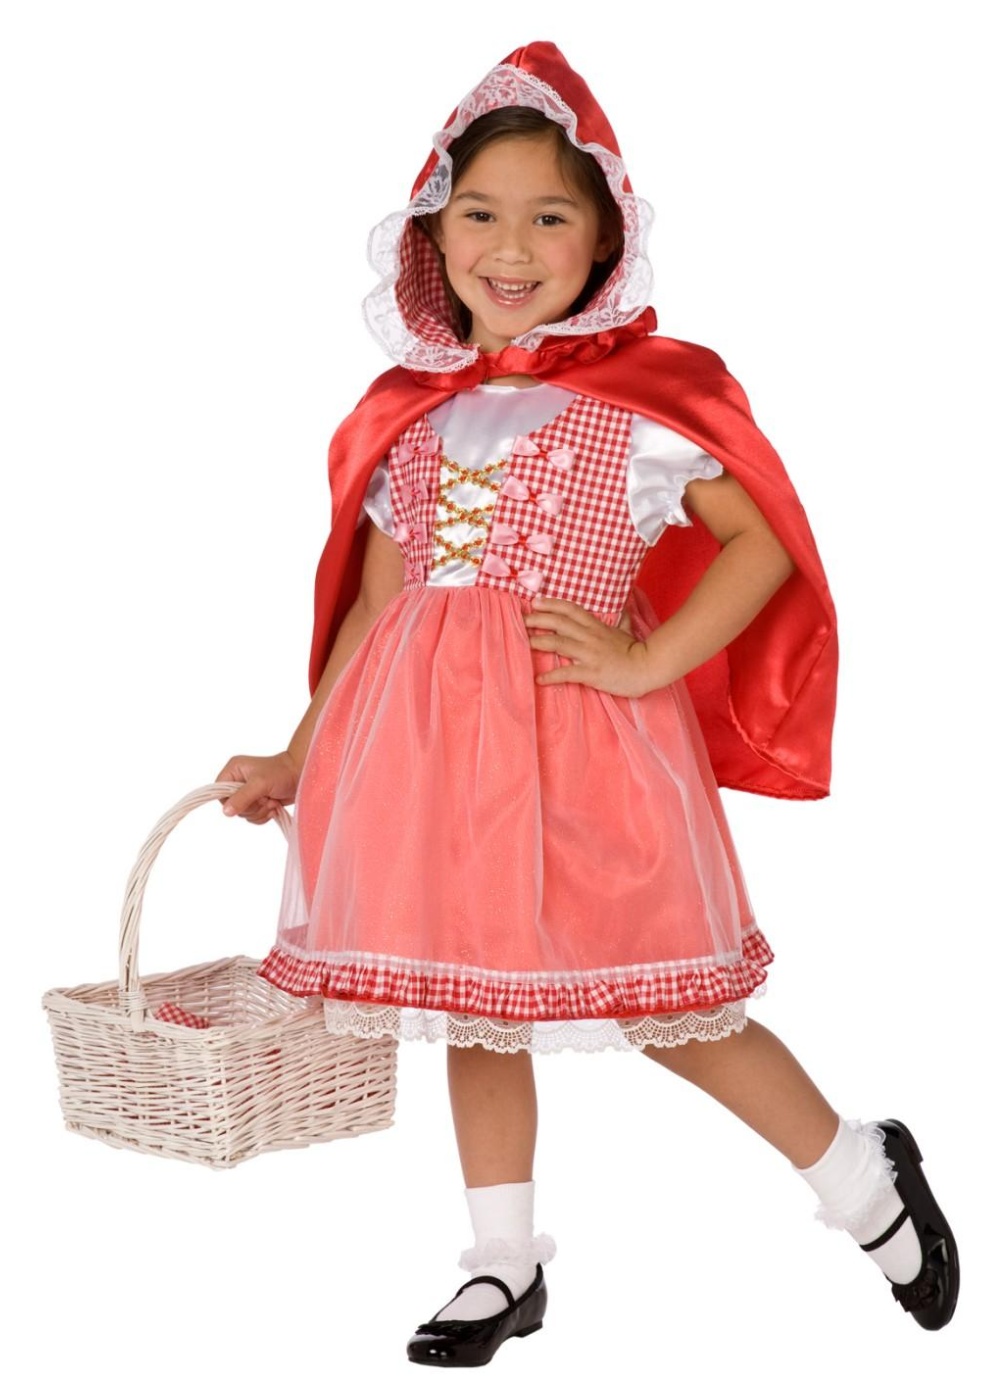  Girls Red Riding Hood Costume